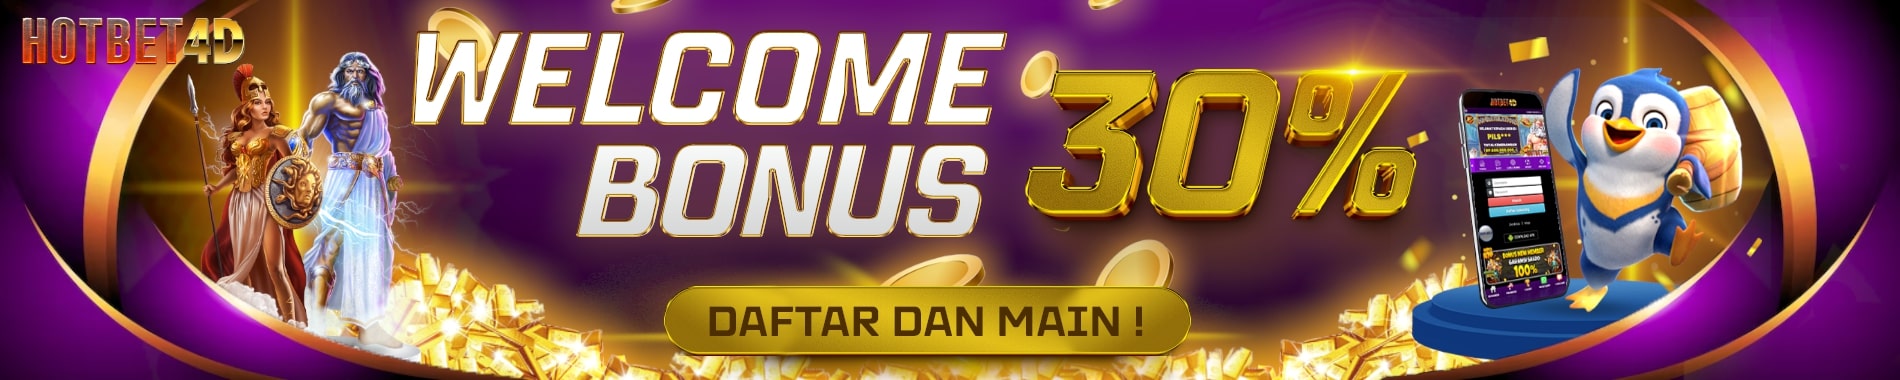 Hotbet4d | Welcome Bonus Slot Online